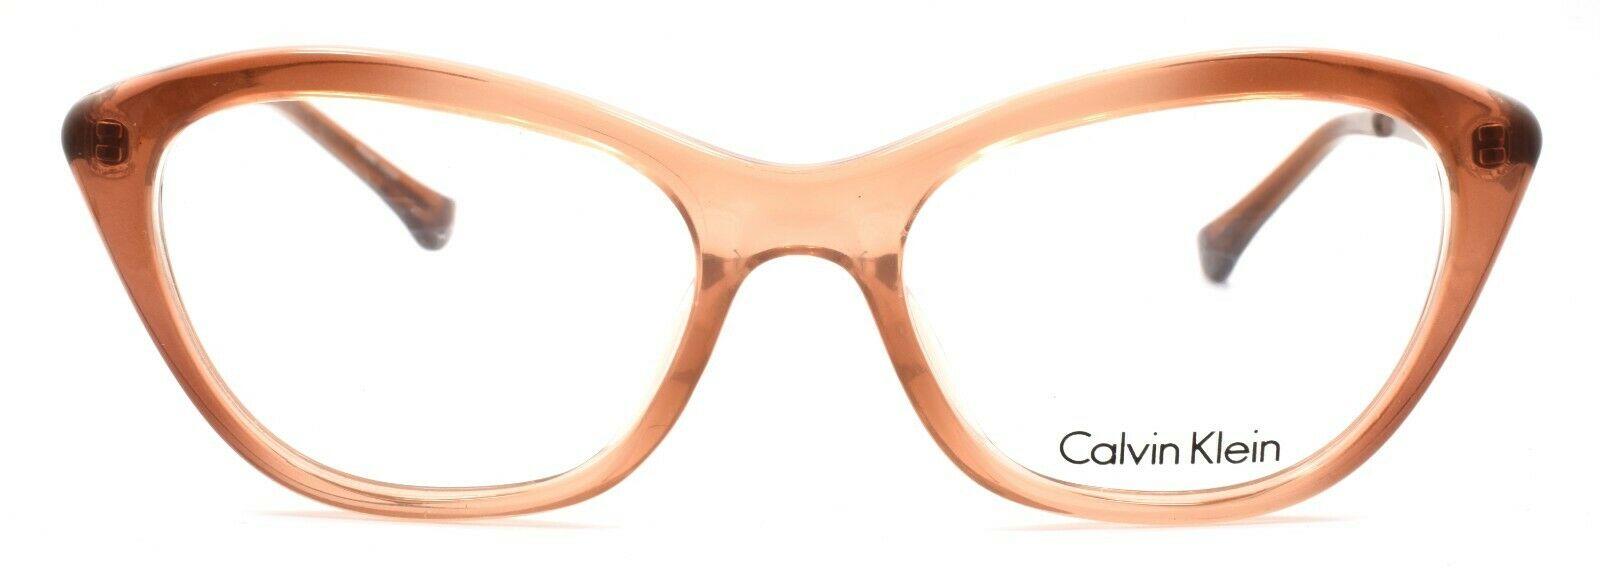 2-Calvin Klein CK5913 202 Women's Eyeglasses Frames Cat-eye 53-18-140-750779097113-IKSpecs